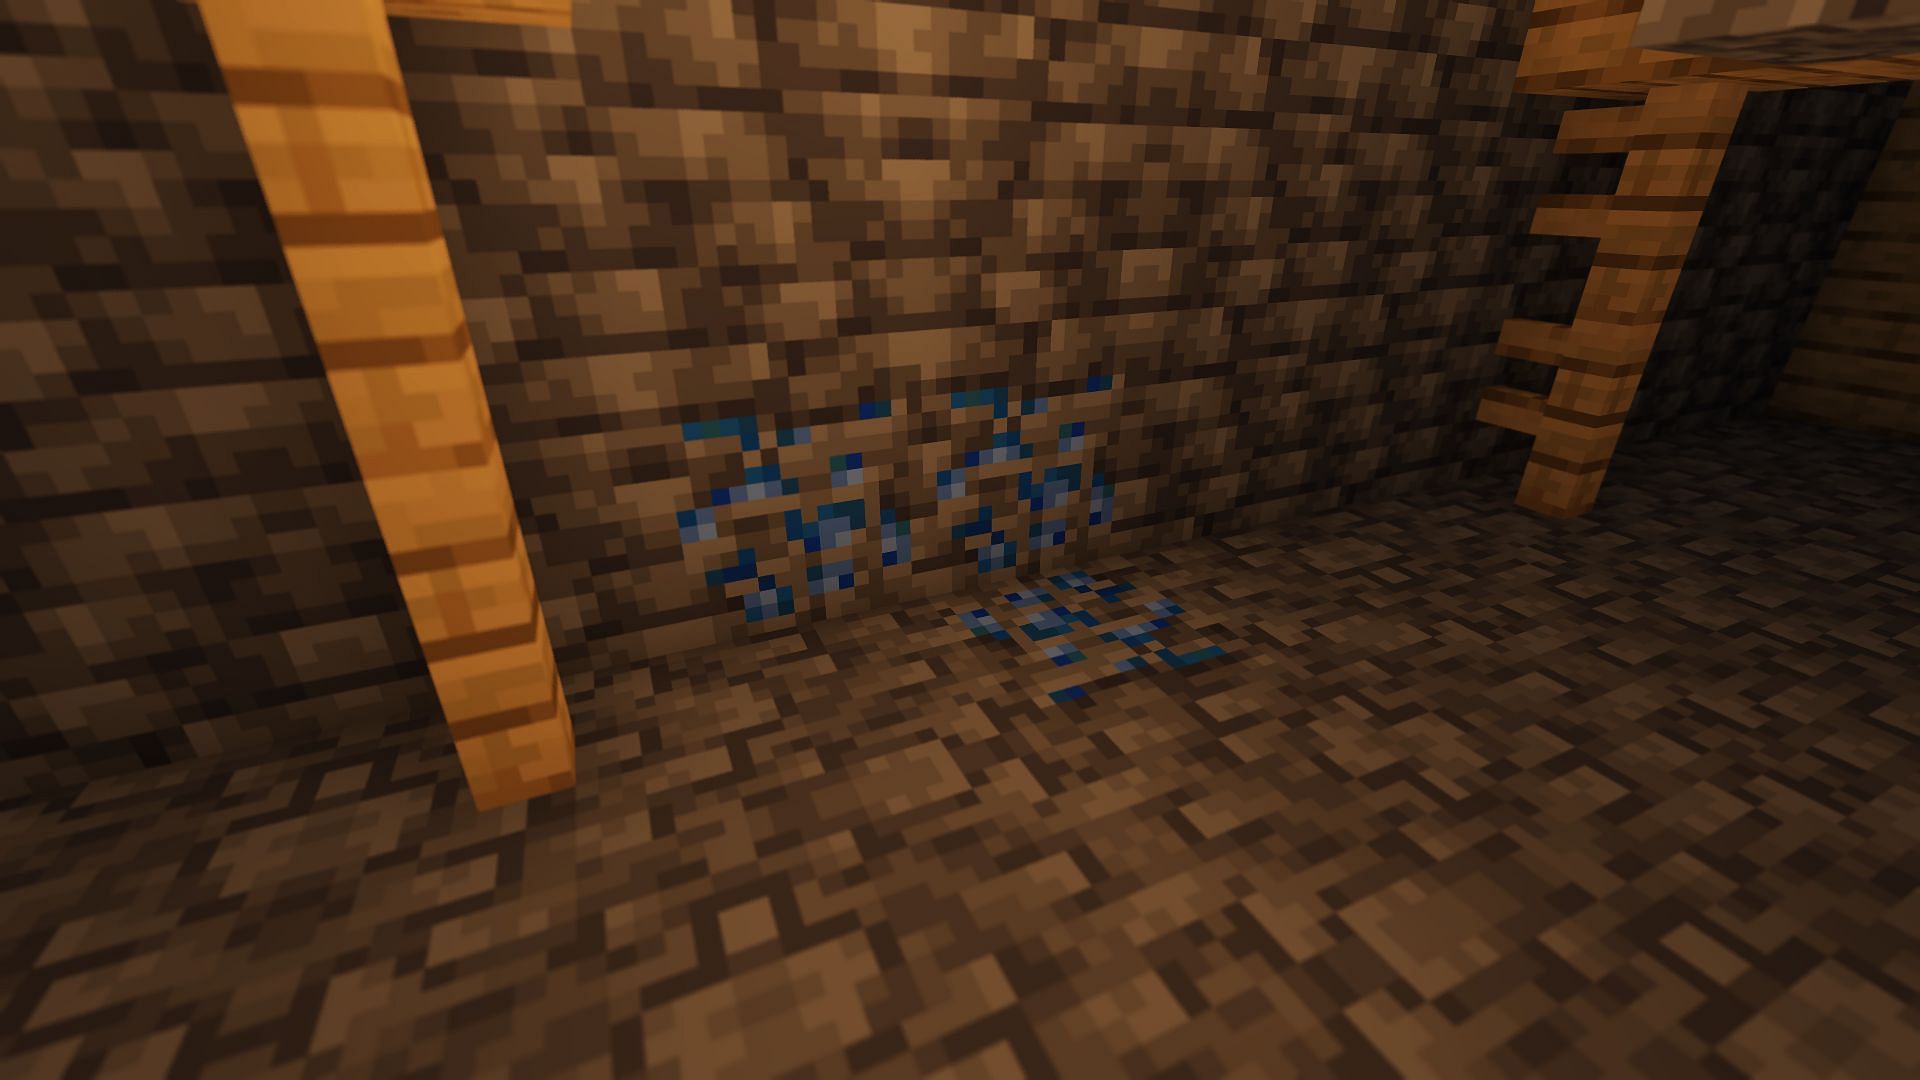 Lapis Lazuli ore found in an abandoned mineshaft (Image via Minecraft)